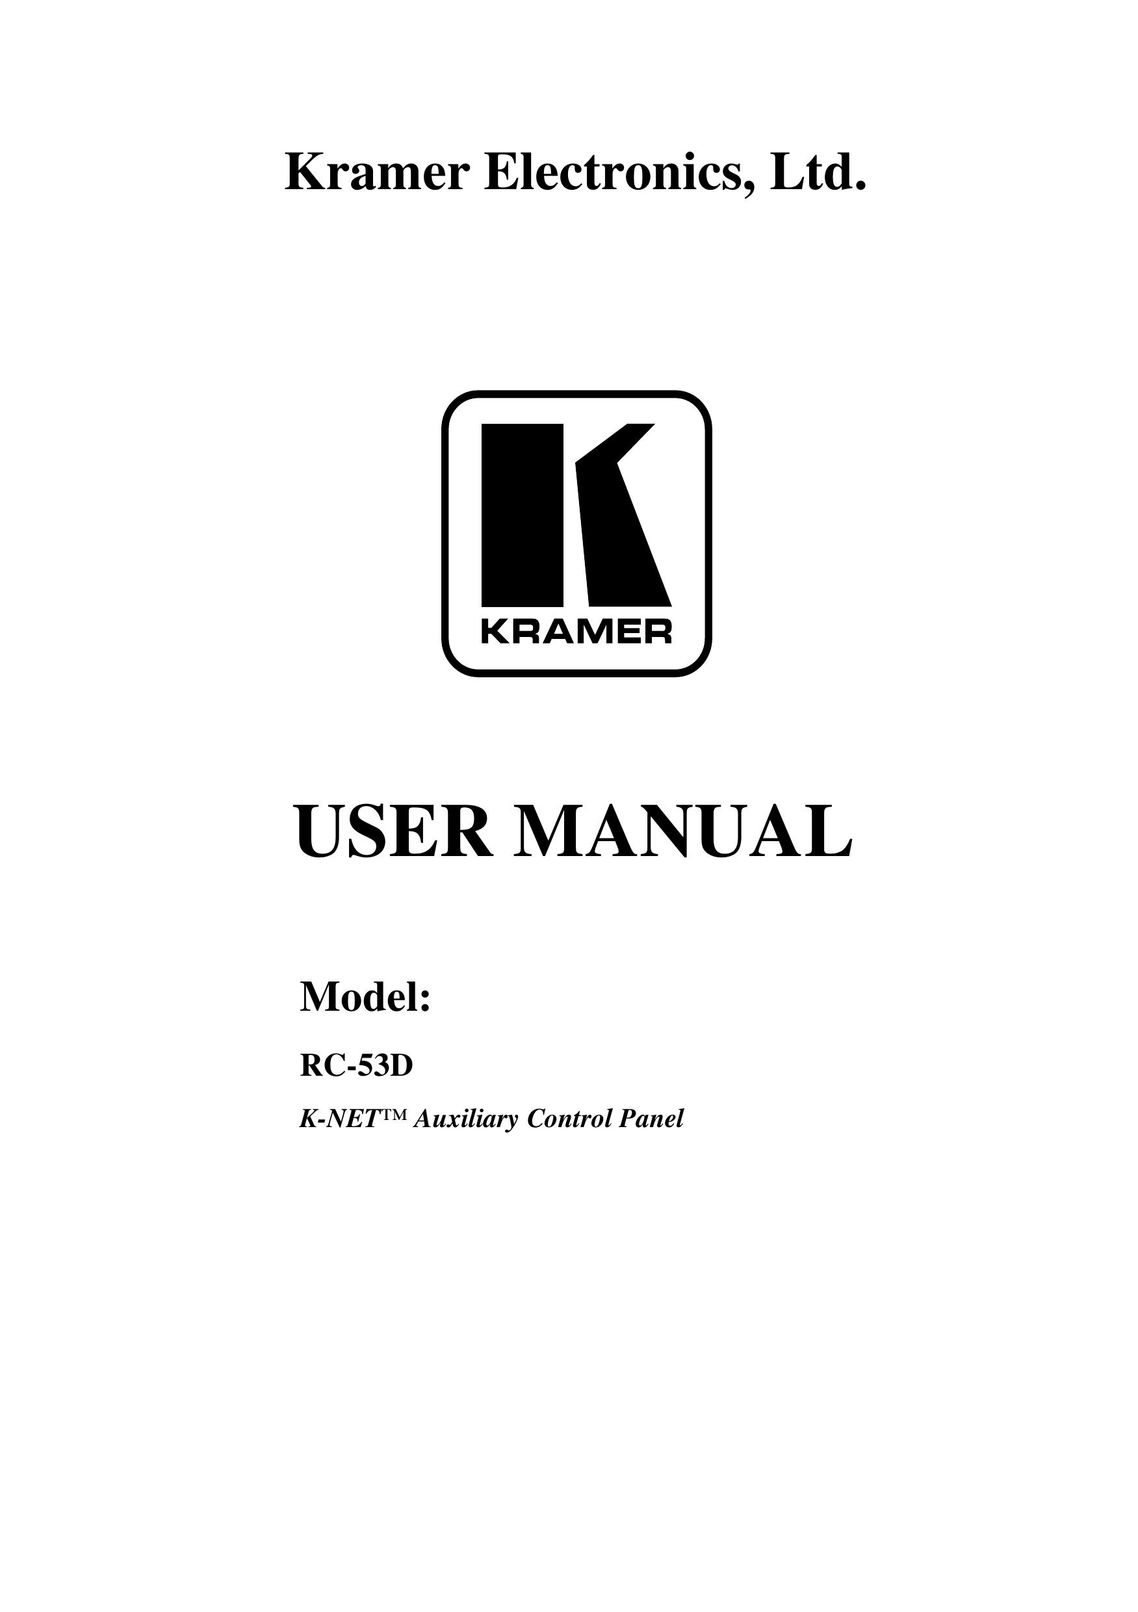 Kramer Electronics RC-53D Video Game Controller User Manual